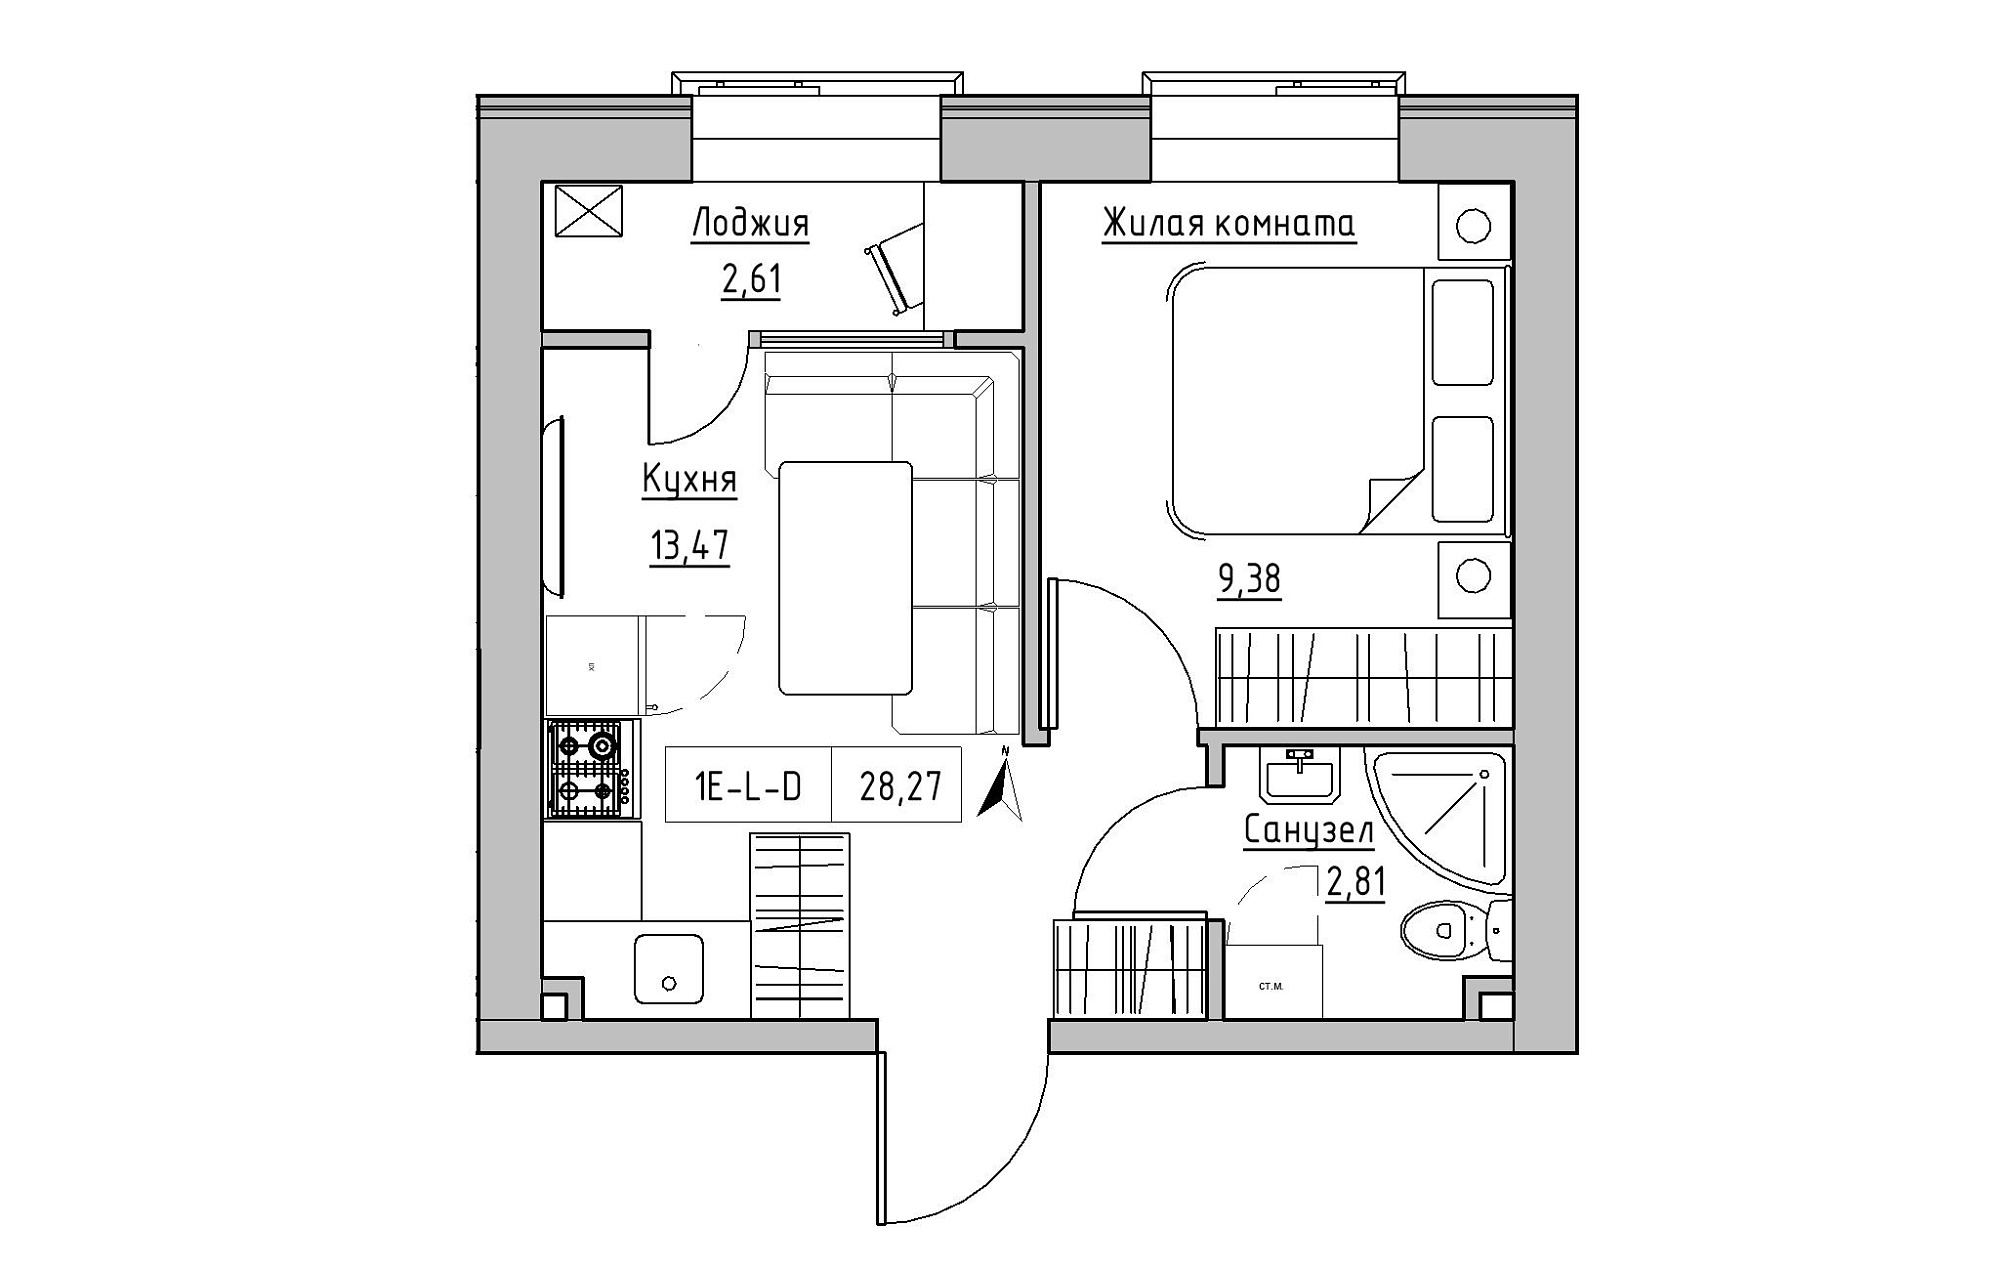 Planning 1-rm flats area 28.27m2, KS-019-02/0015.